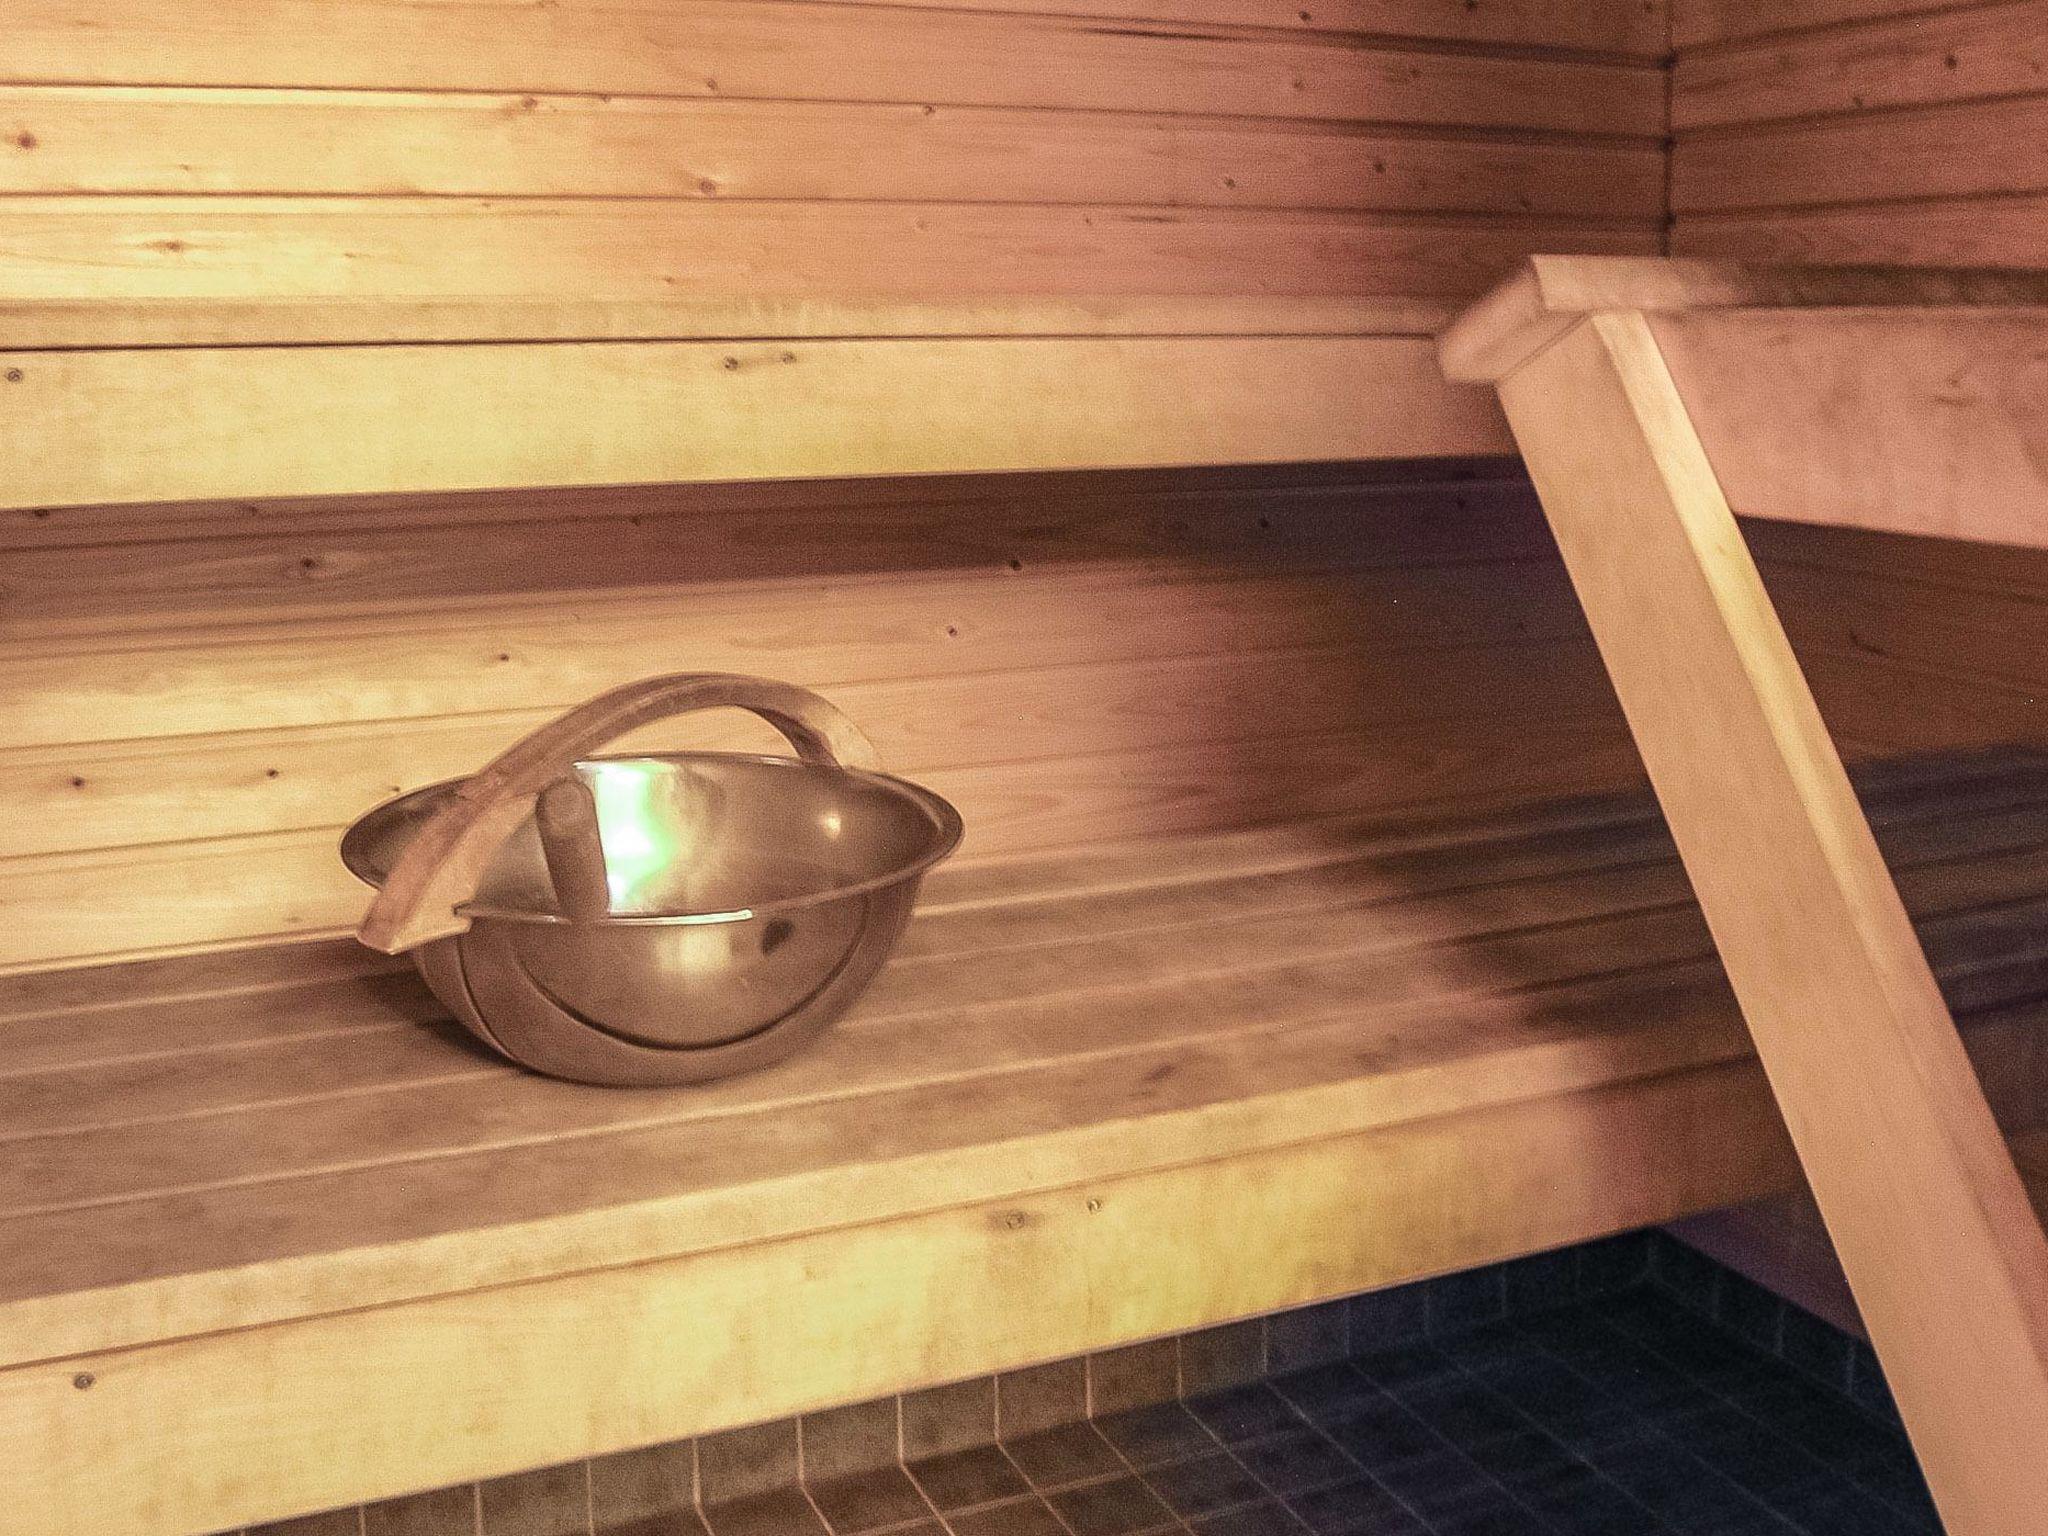 Photo 15 - 3 bedroom House in Sotkamo with sauna